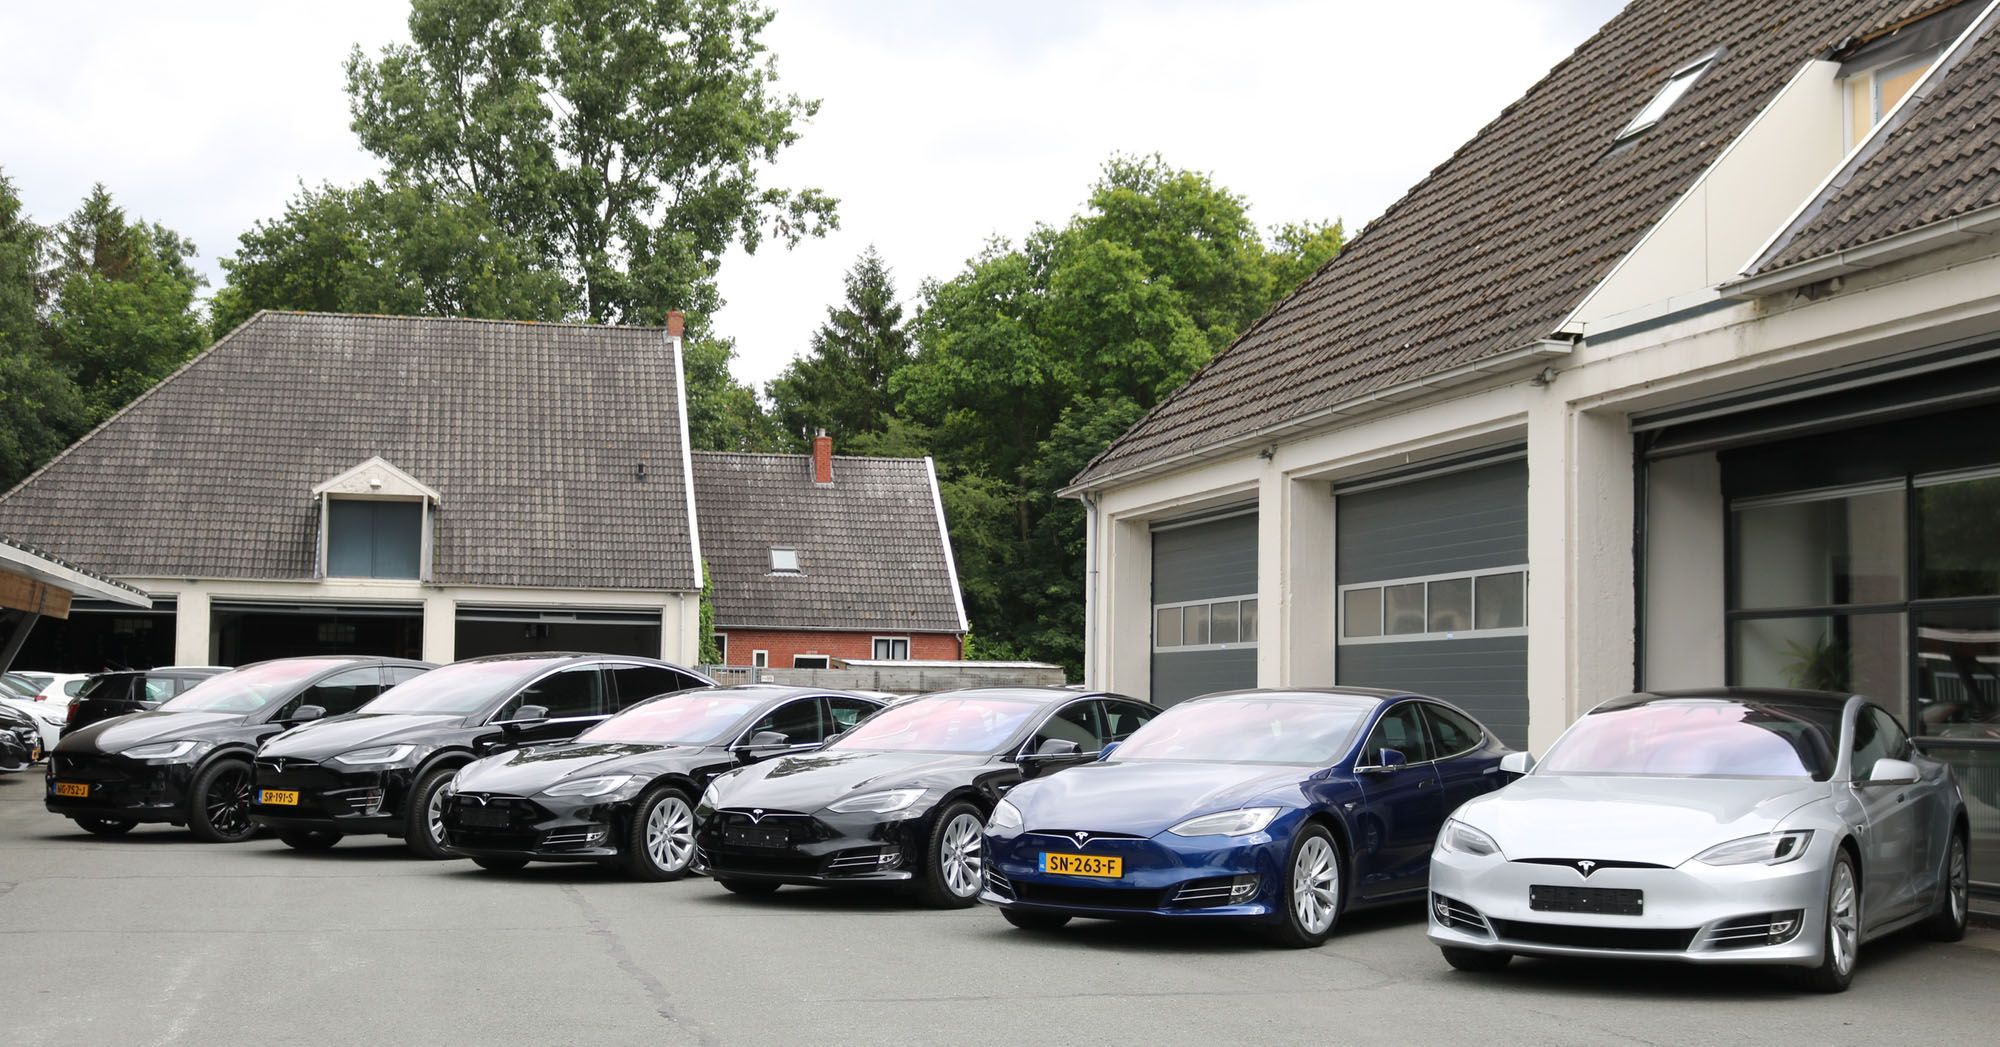 Tesla cars vehicles lined up